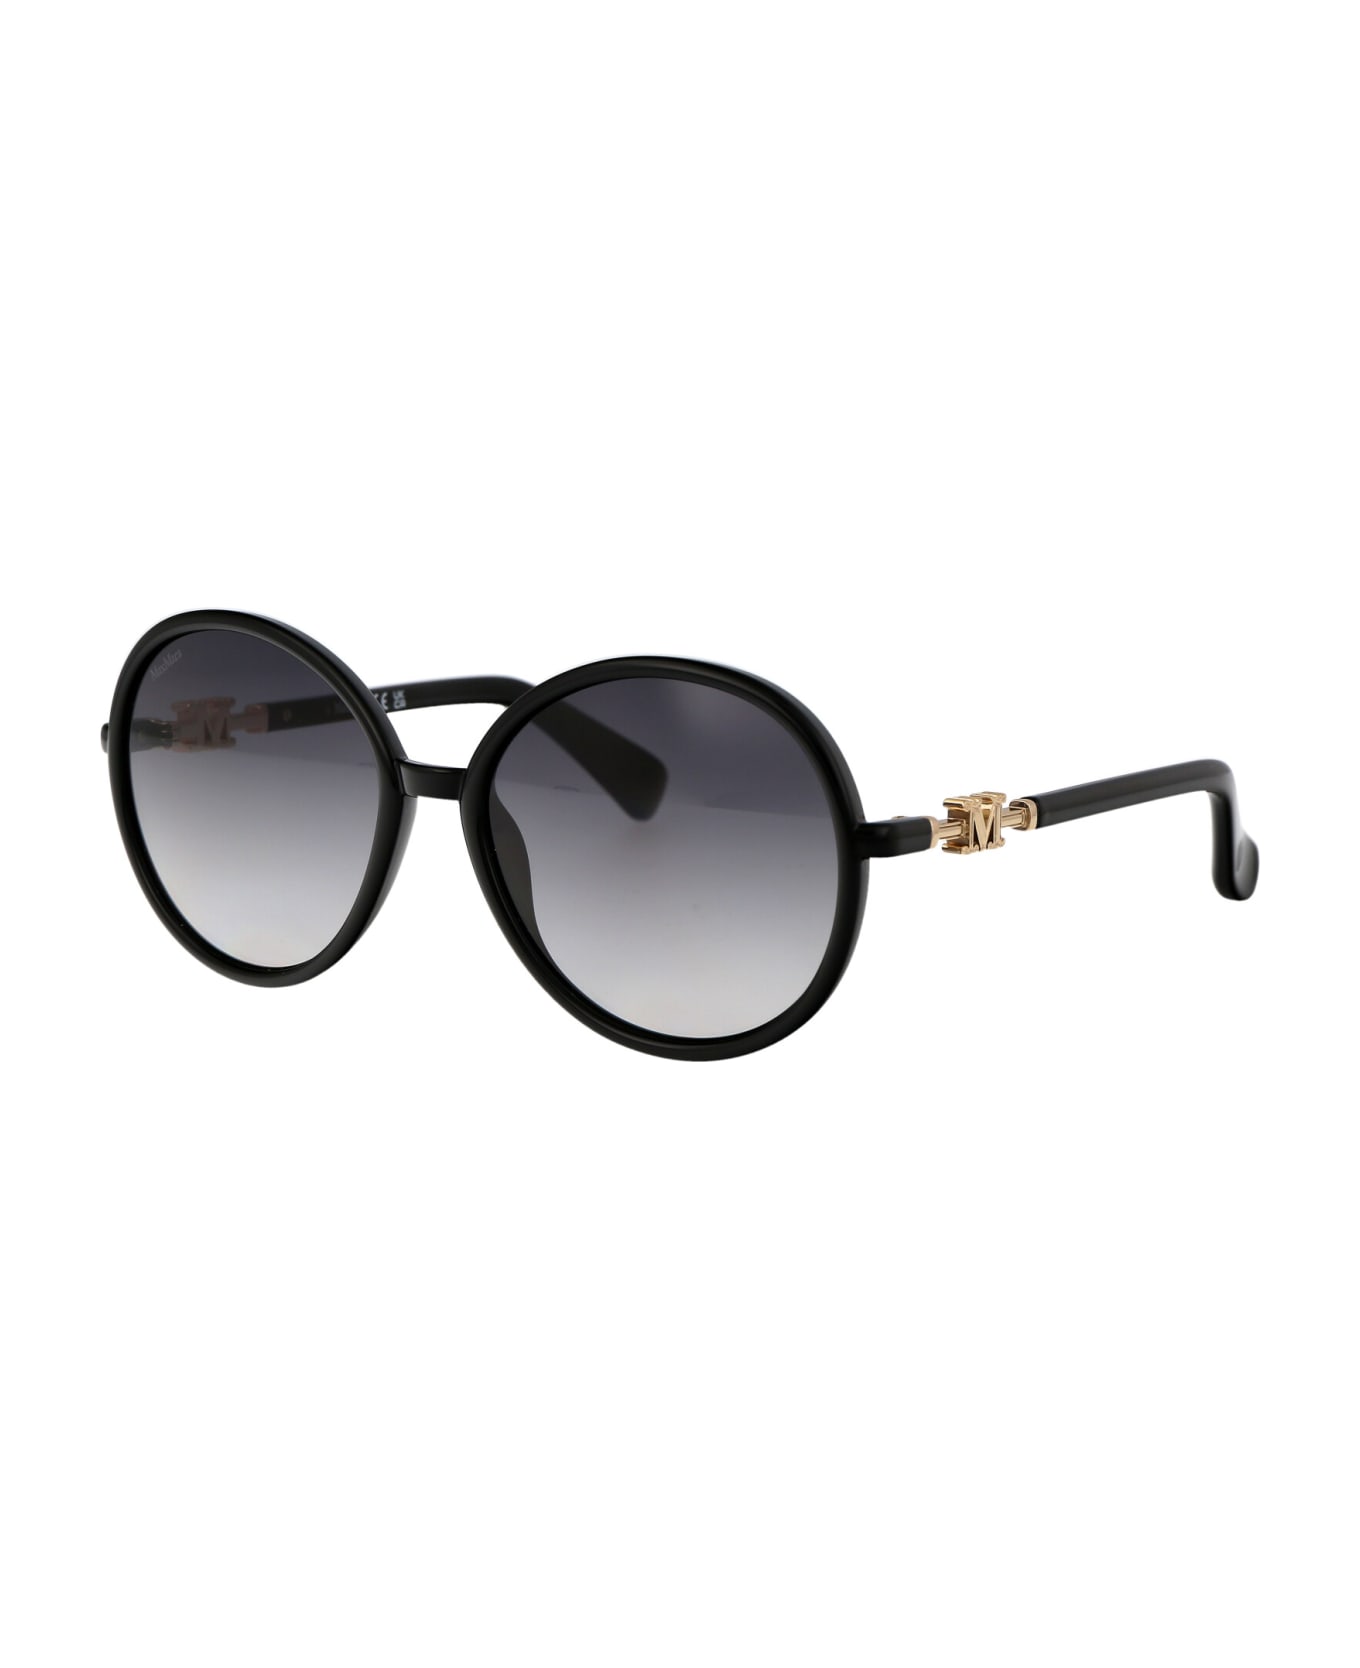 Max Mara Emme15 Sunglasses - 01B Nero Lucido/Fumo Grad サングラス